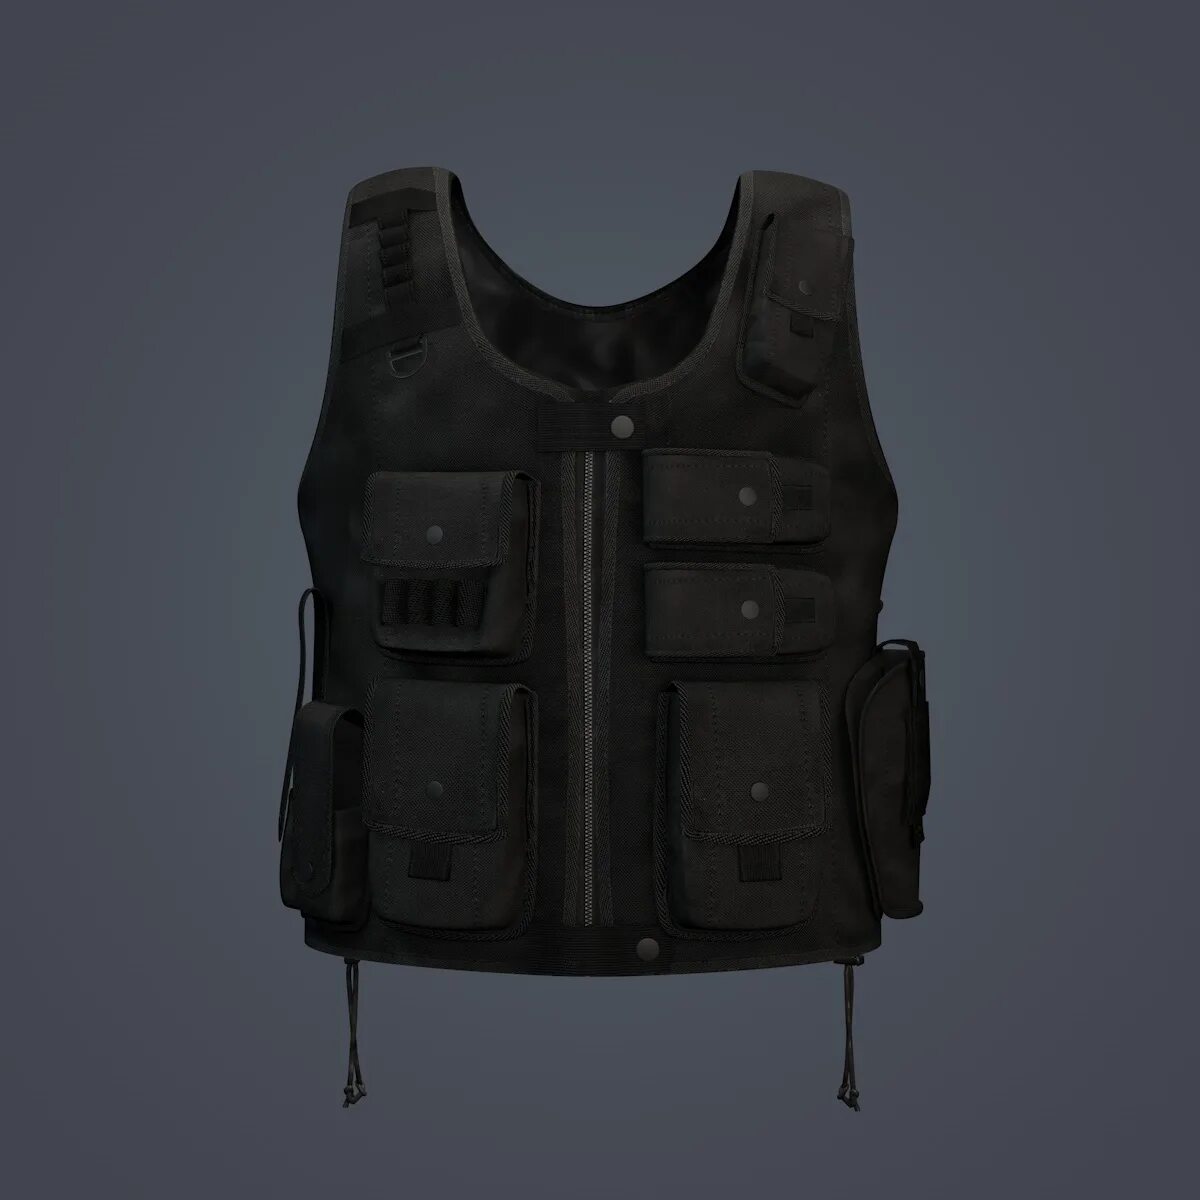 Vest 1. Tactical Vest Fallout 3. DAYZ Tactical Vest. Vest DAYZ Mod бронежилет. Тактический жилет DAYZ.